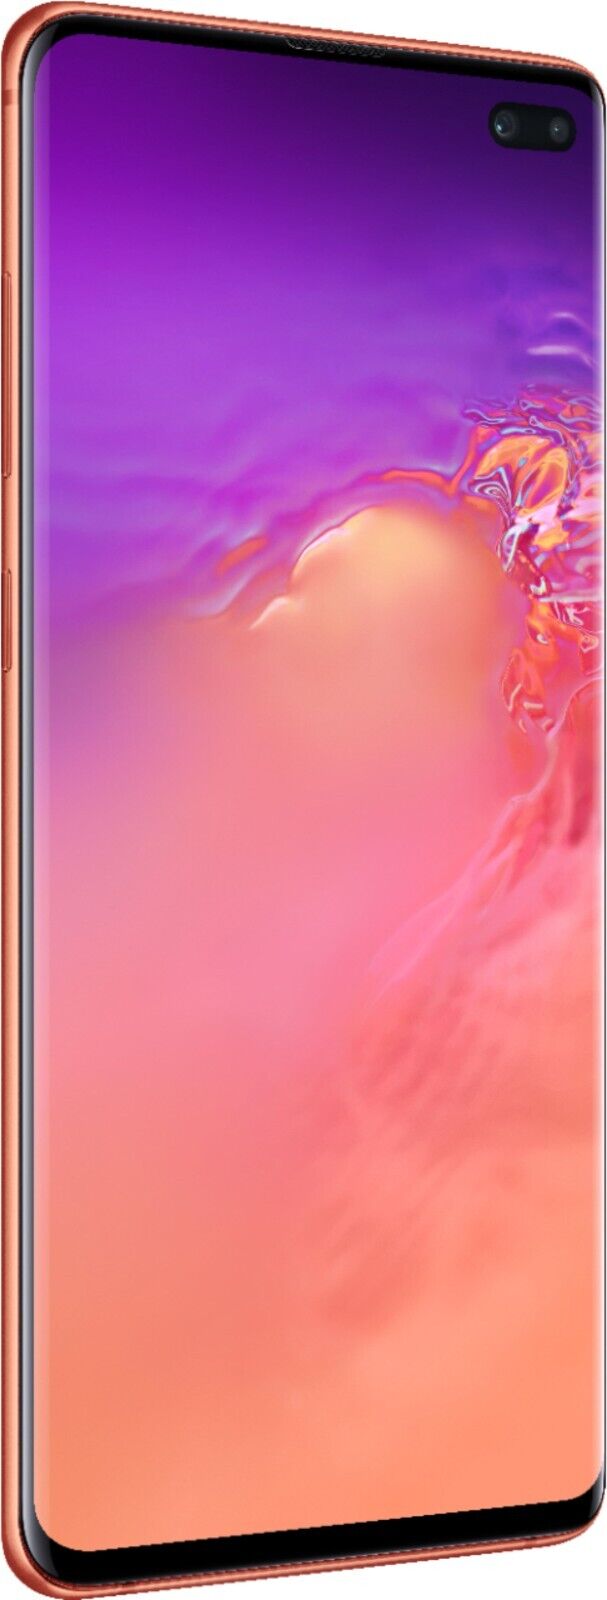 Galaxy S10+ 128GB - Flamingo Pink - Fully unlocked (GSM & CDMA)